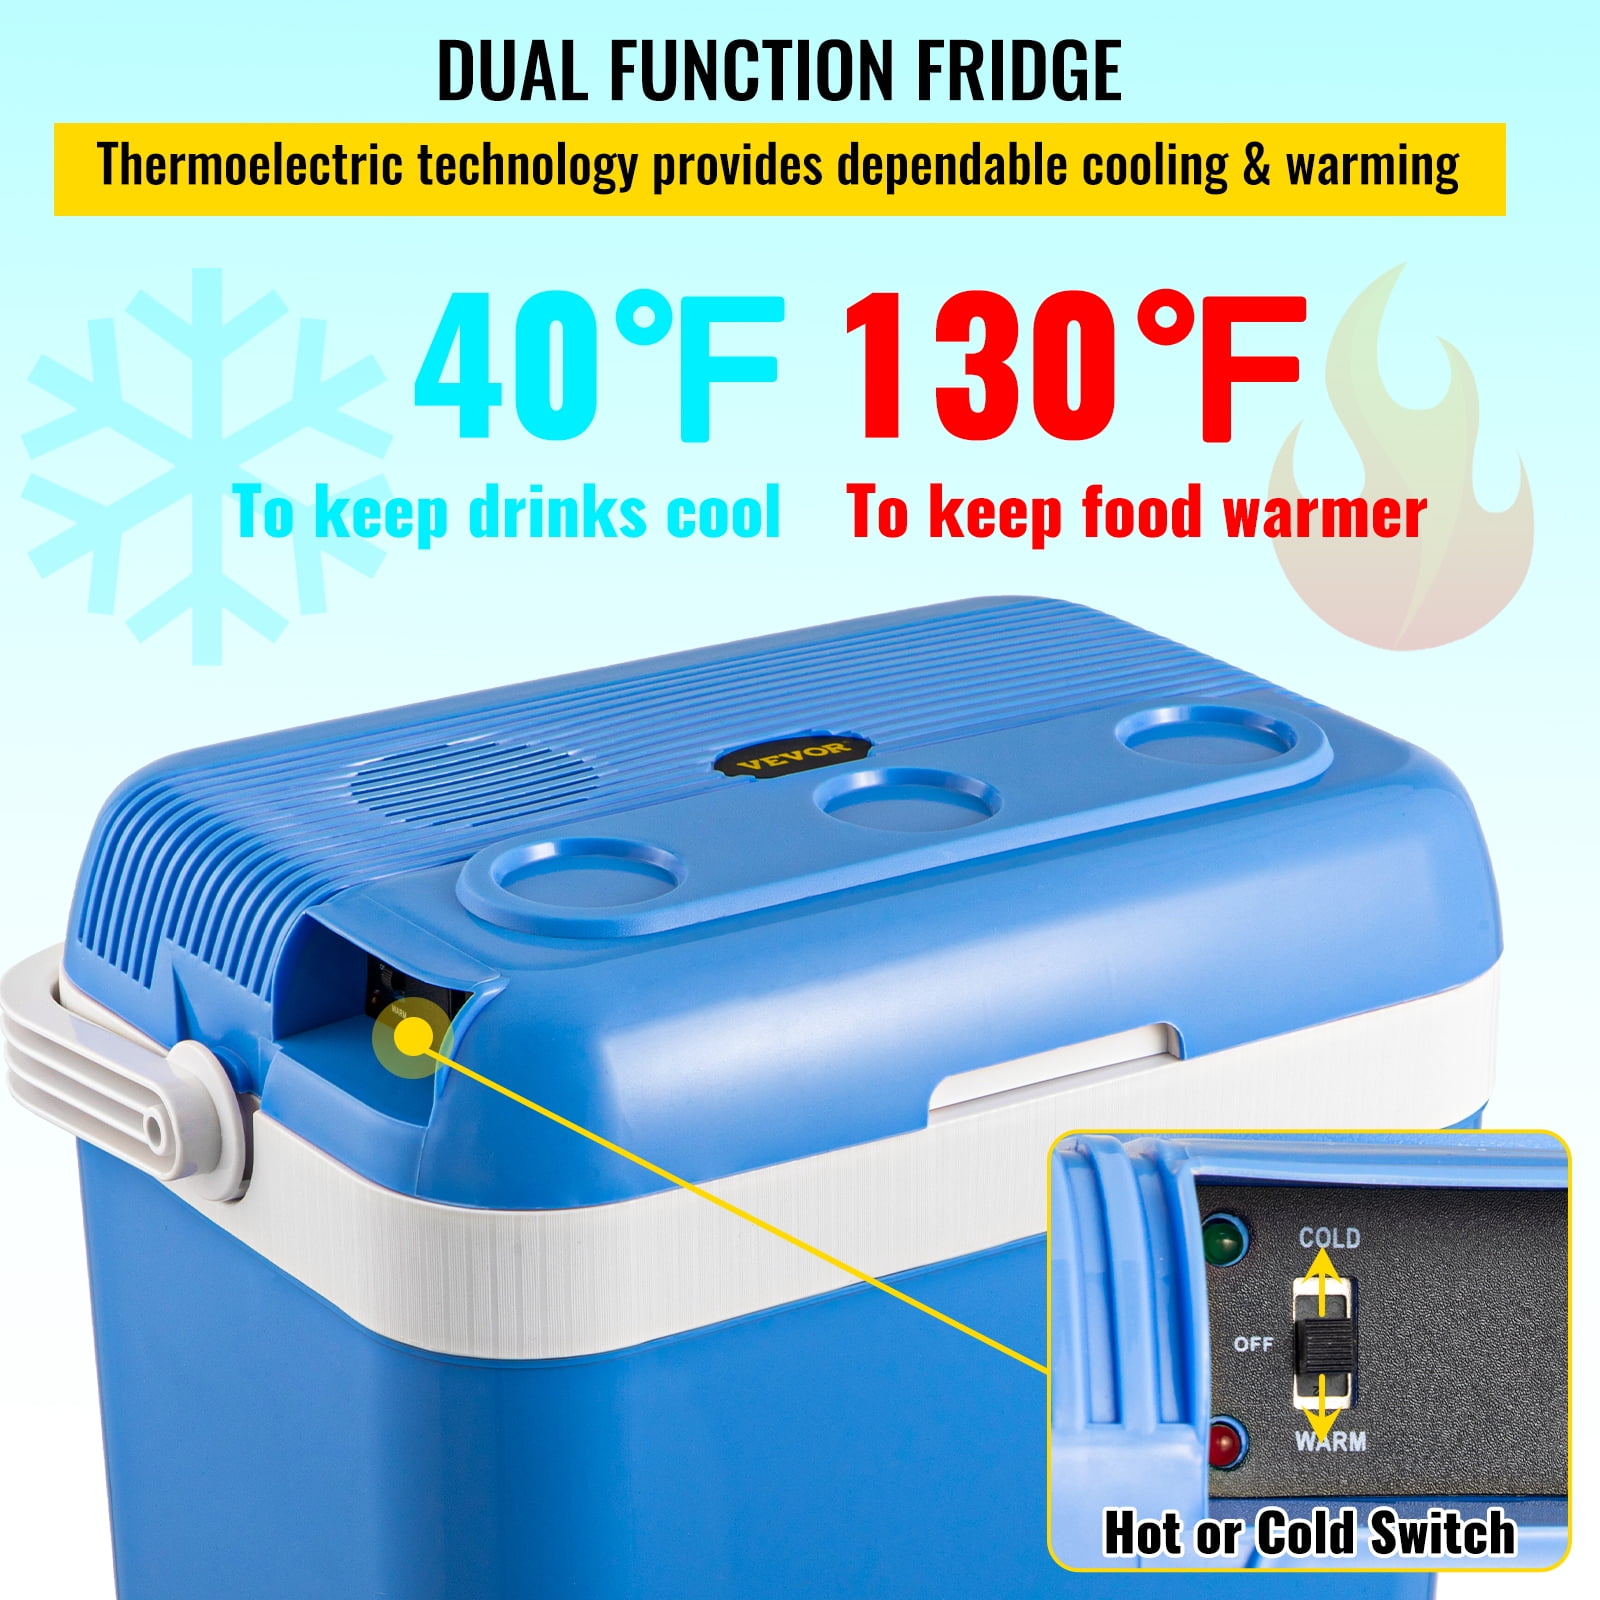 VEVOR Electric Cooler Car Camping Box Refrigerator 30-50L 60W Thermobox 12V